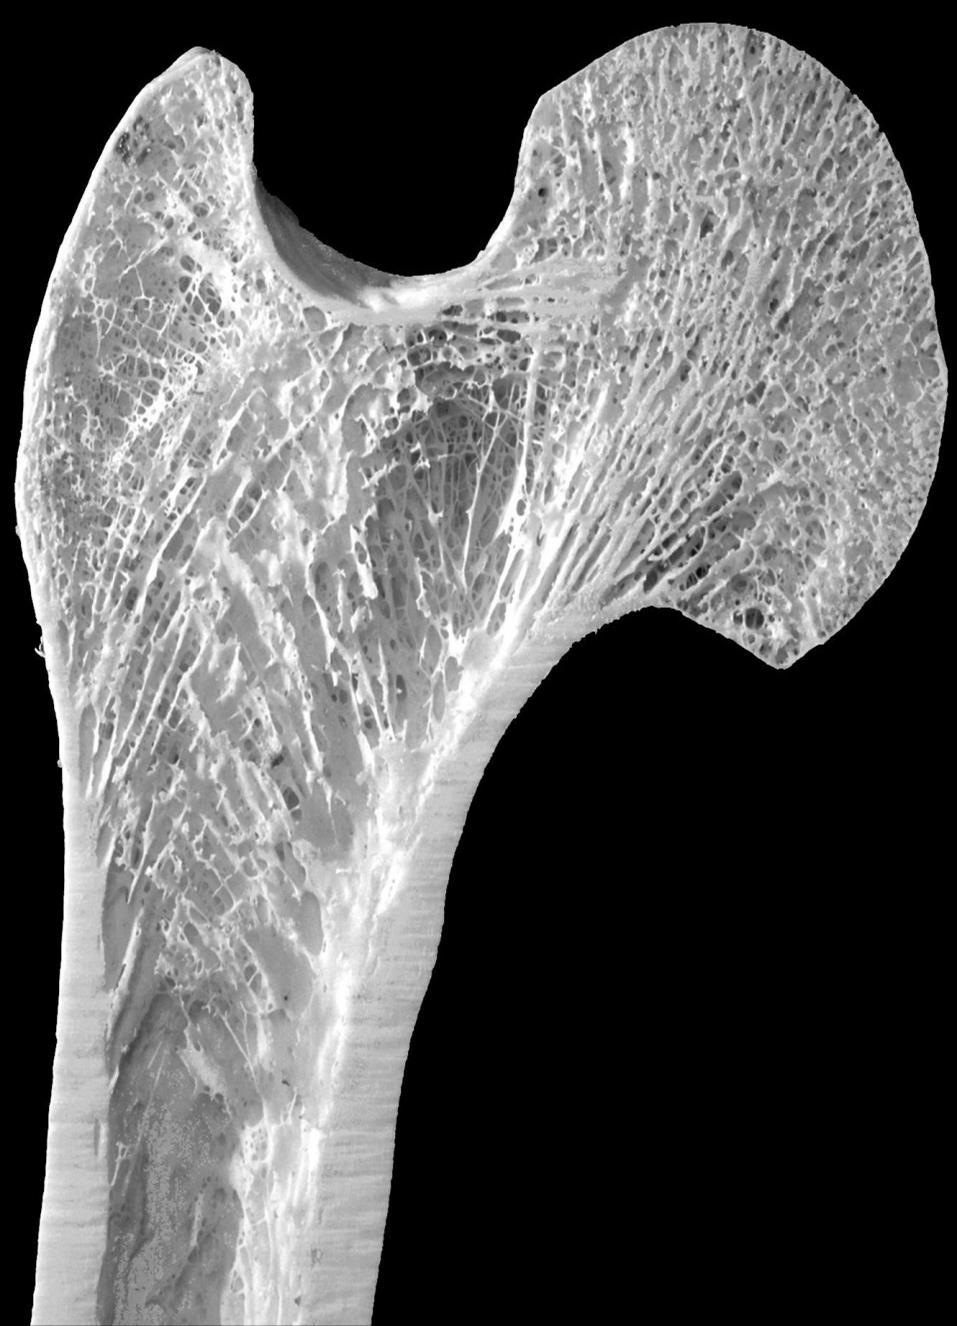 Tessuto osseo Epifisi prossimale del femore: